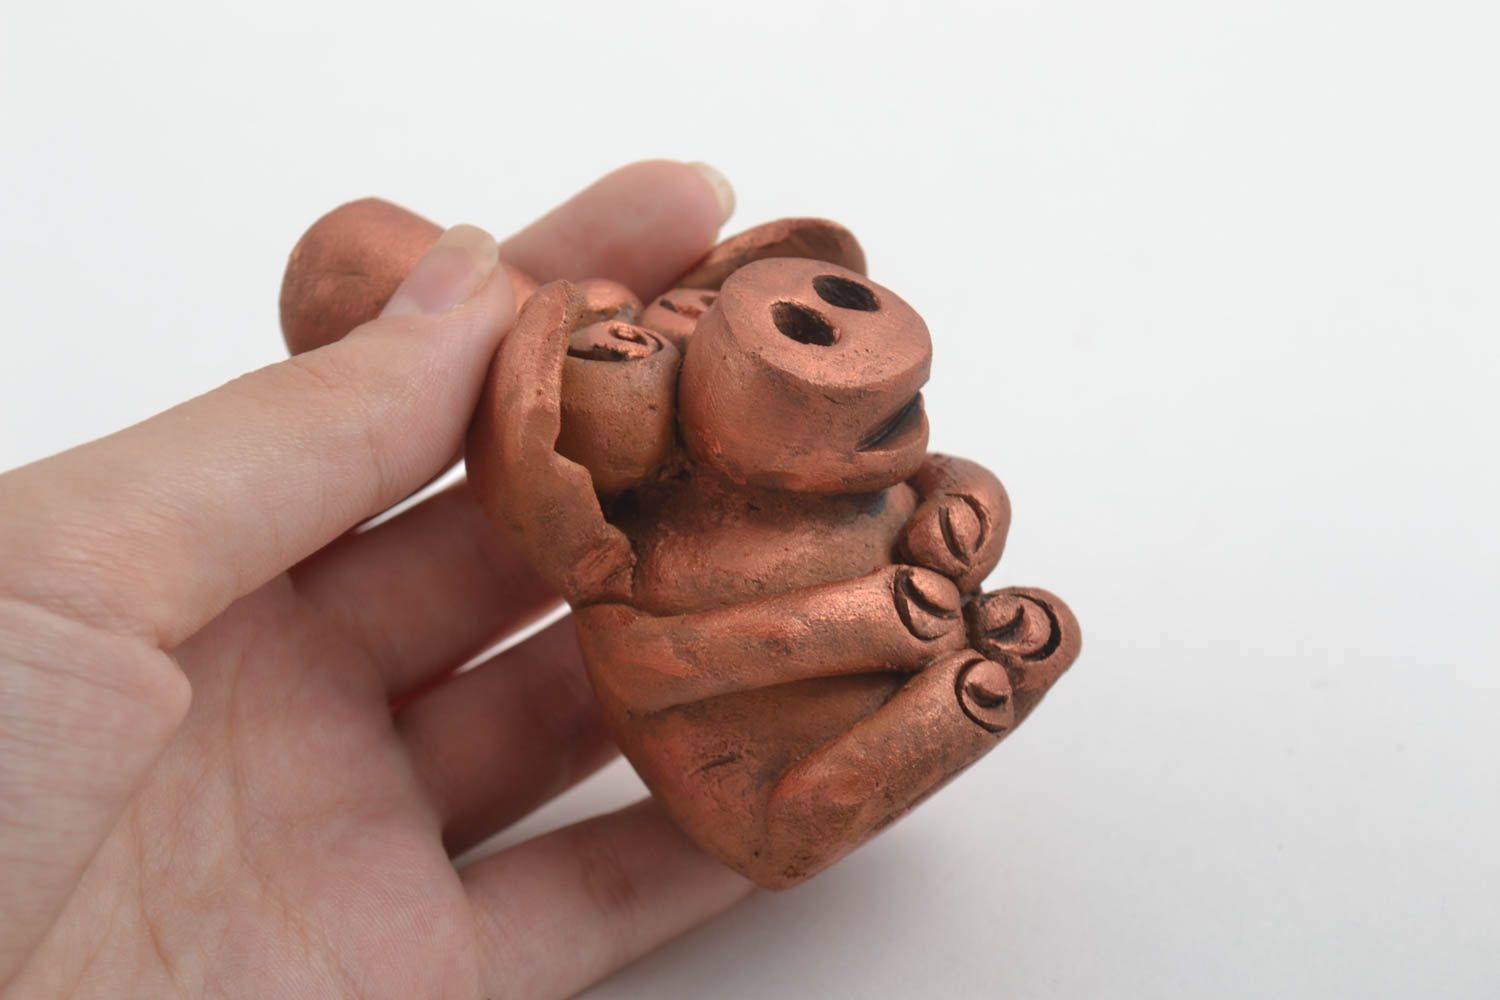 Funny handmade ceramic figurine clay statuette designs sculpture art gift ideas photo 5